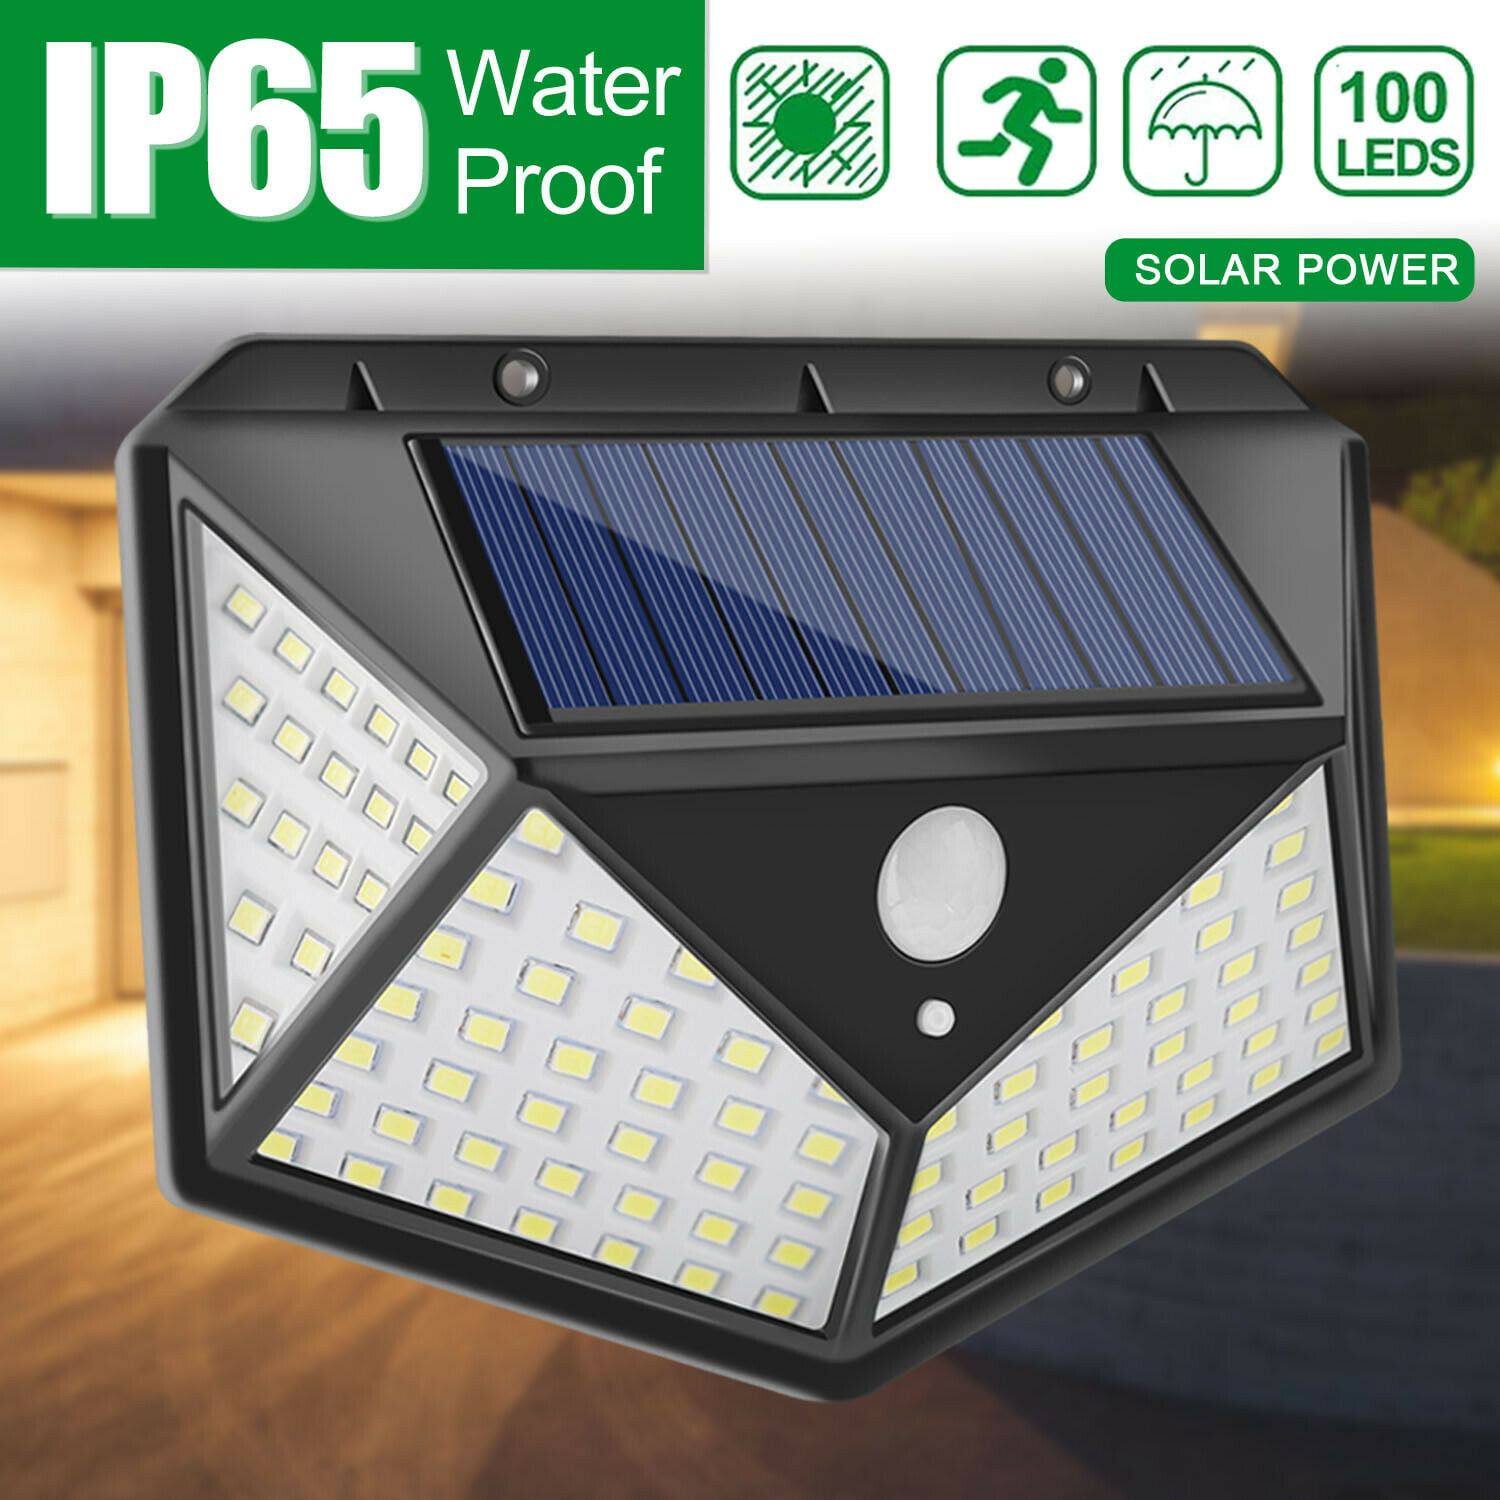 206 LED Solar Power Motion Sensor Wall Light Outdoor Garden Security Flood Lamp